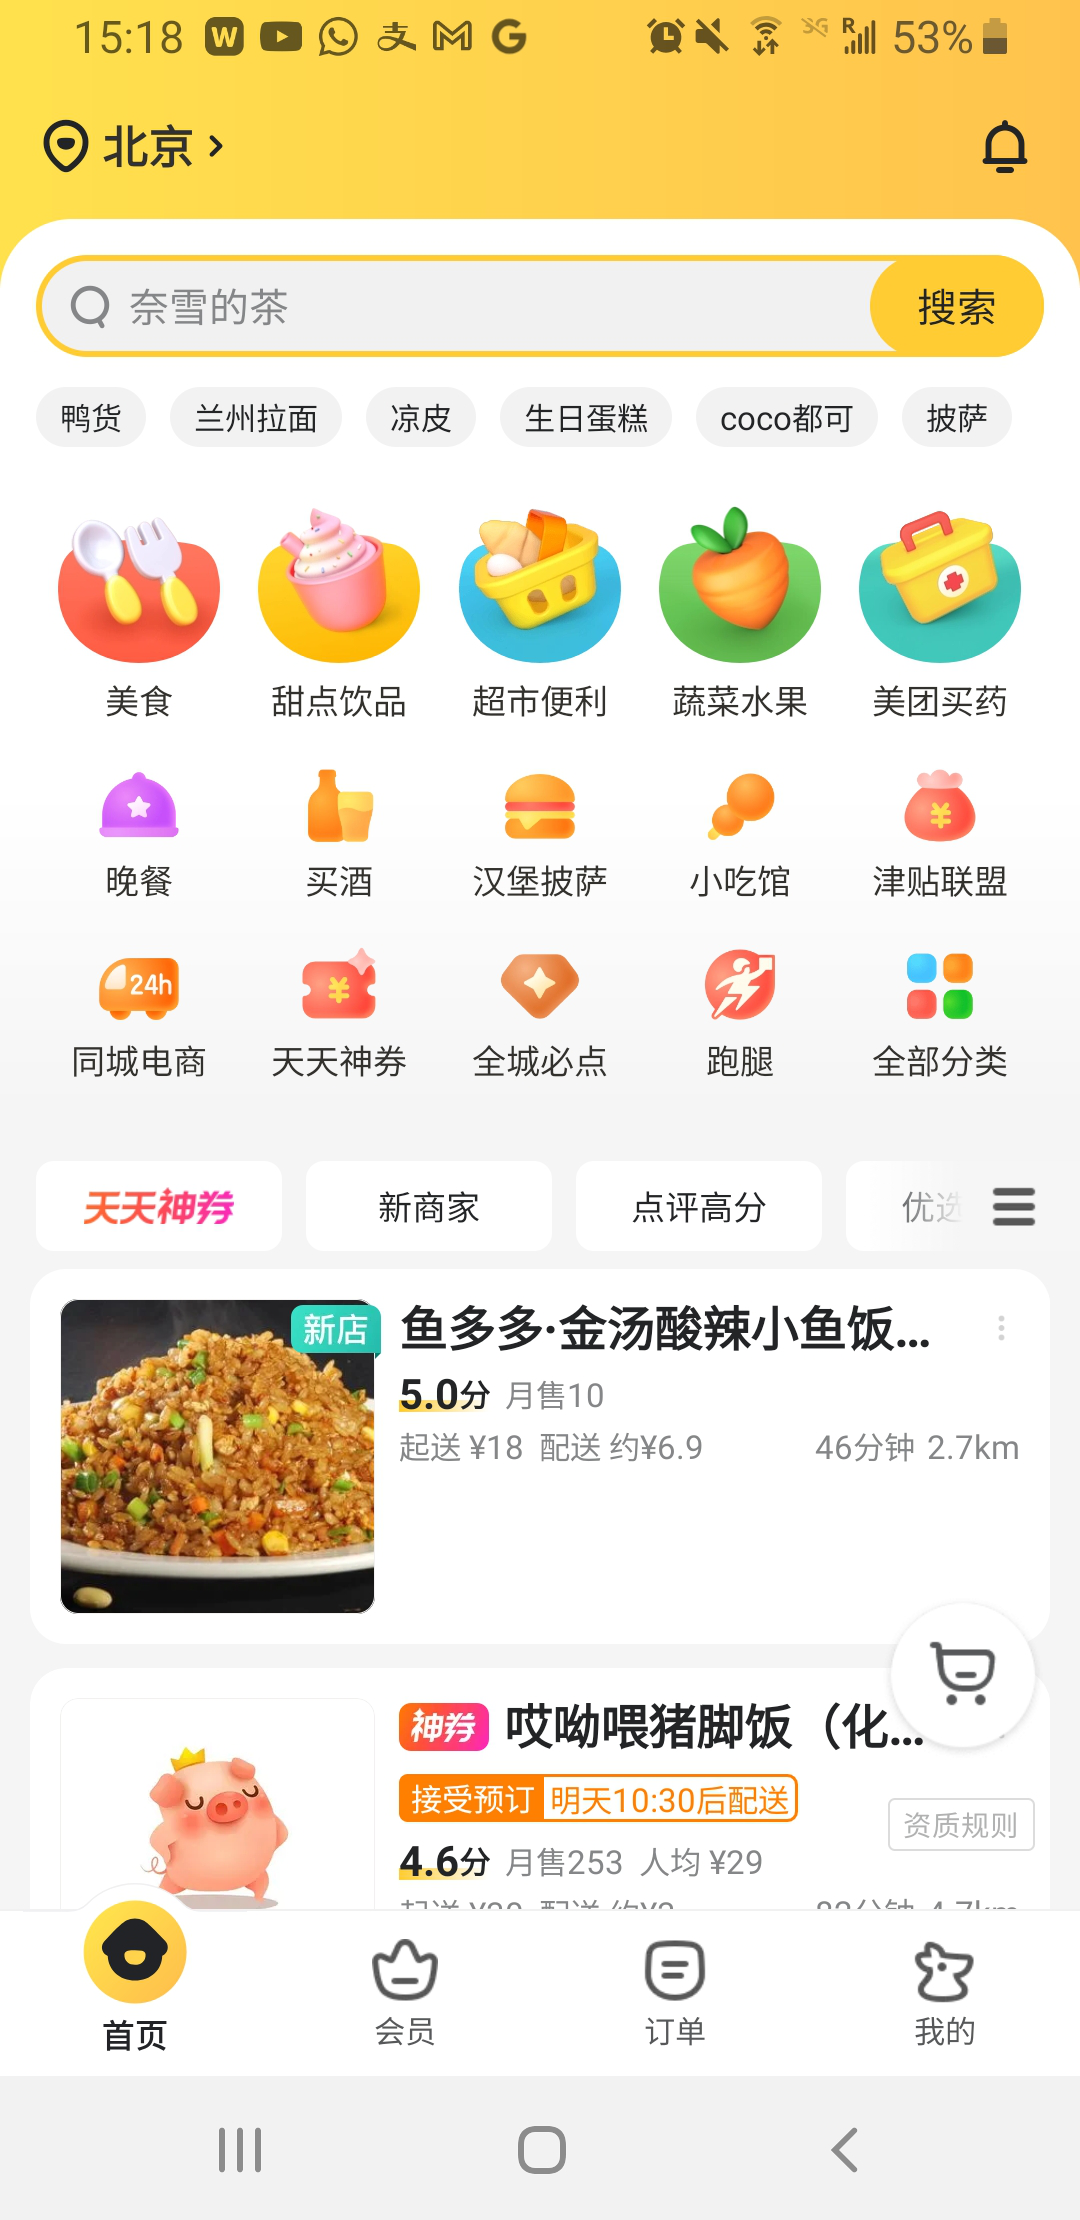 Meituan food delivery app homepage